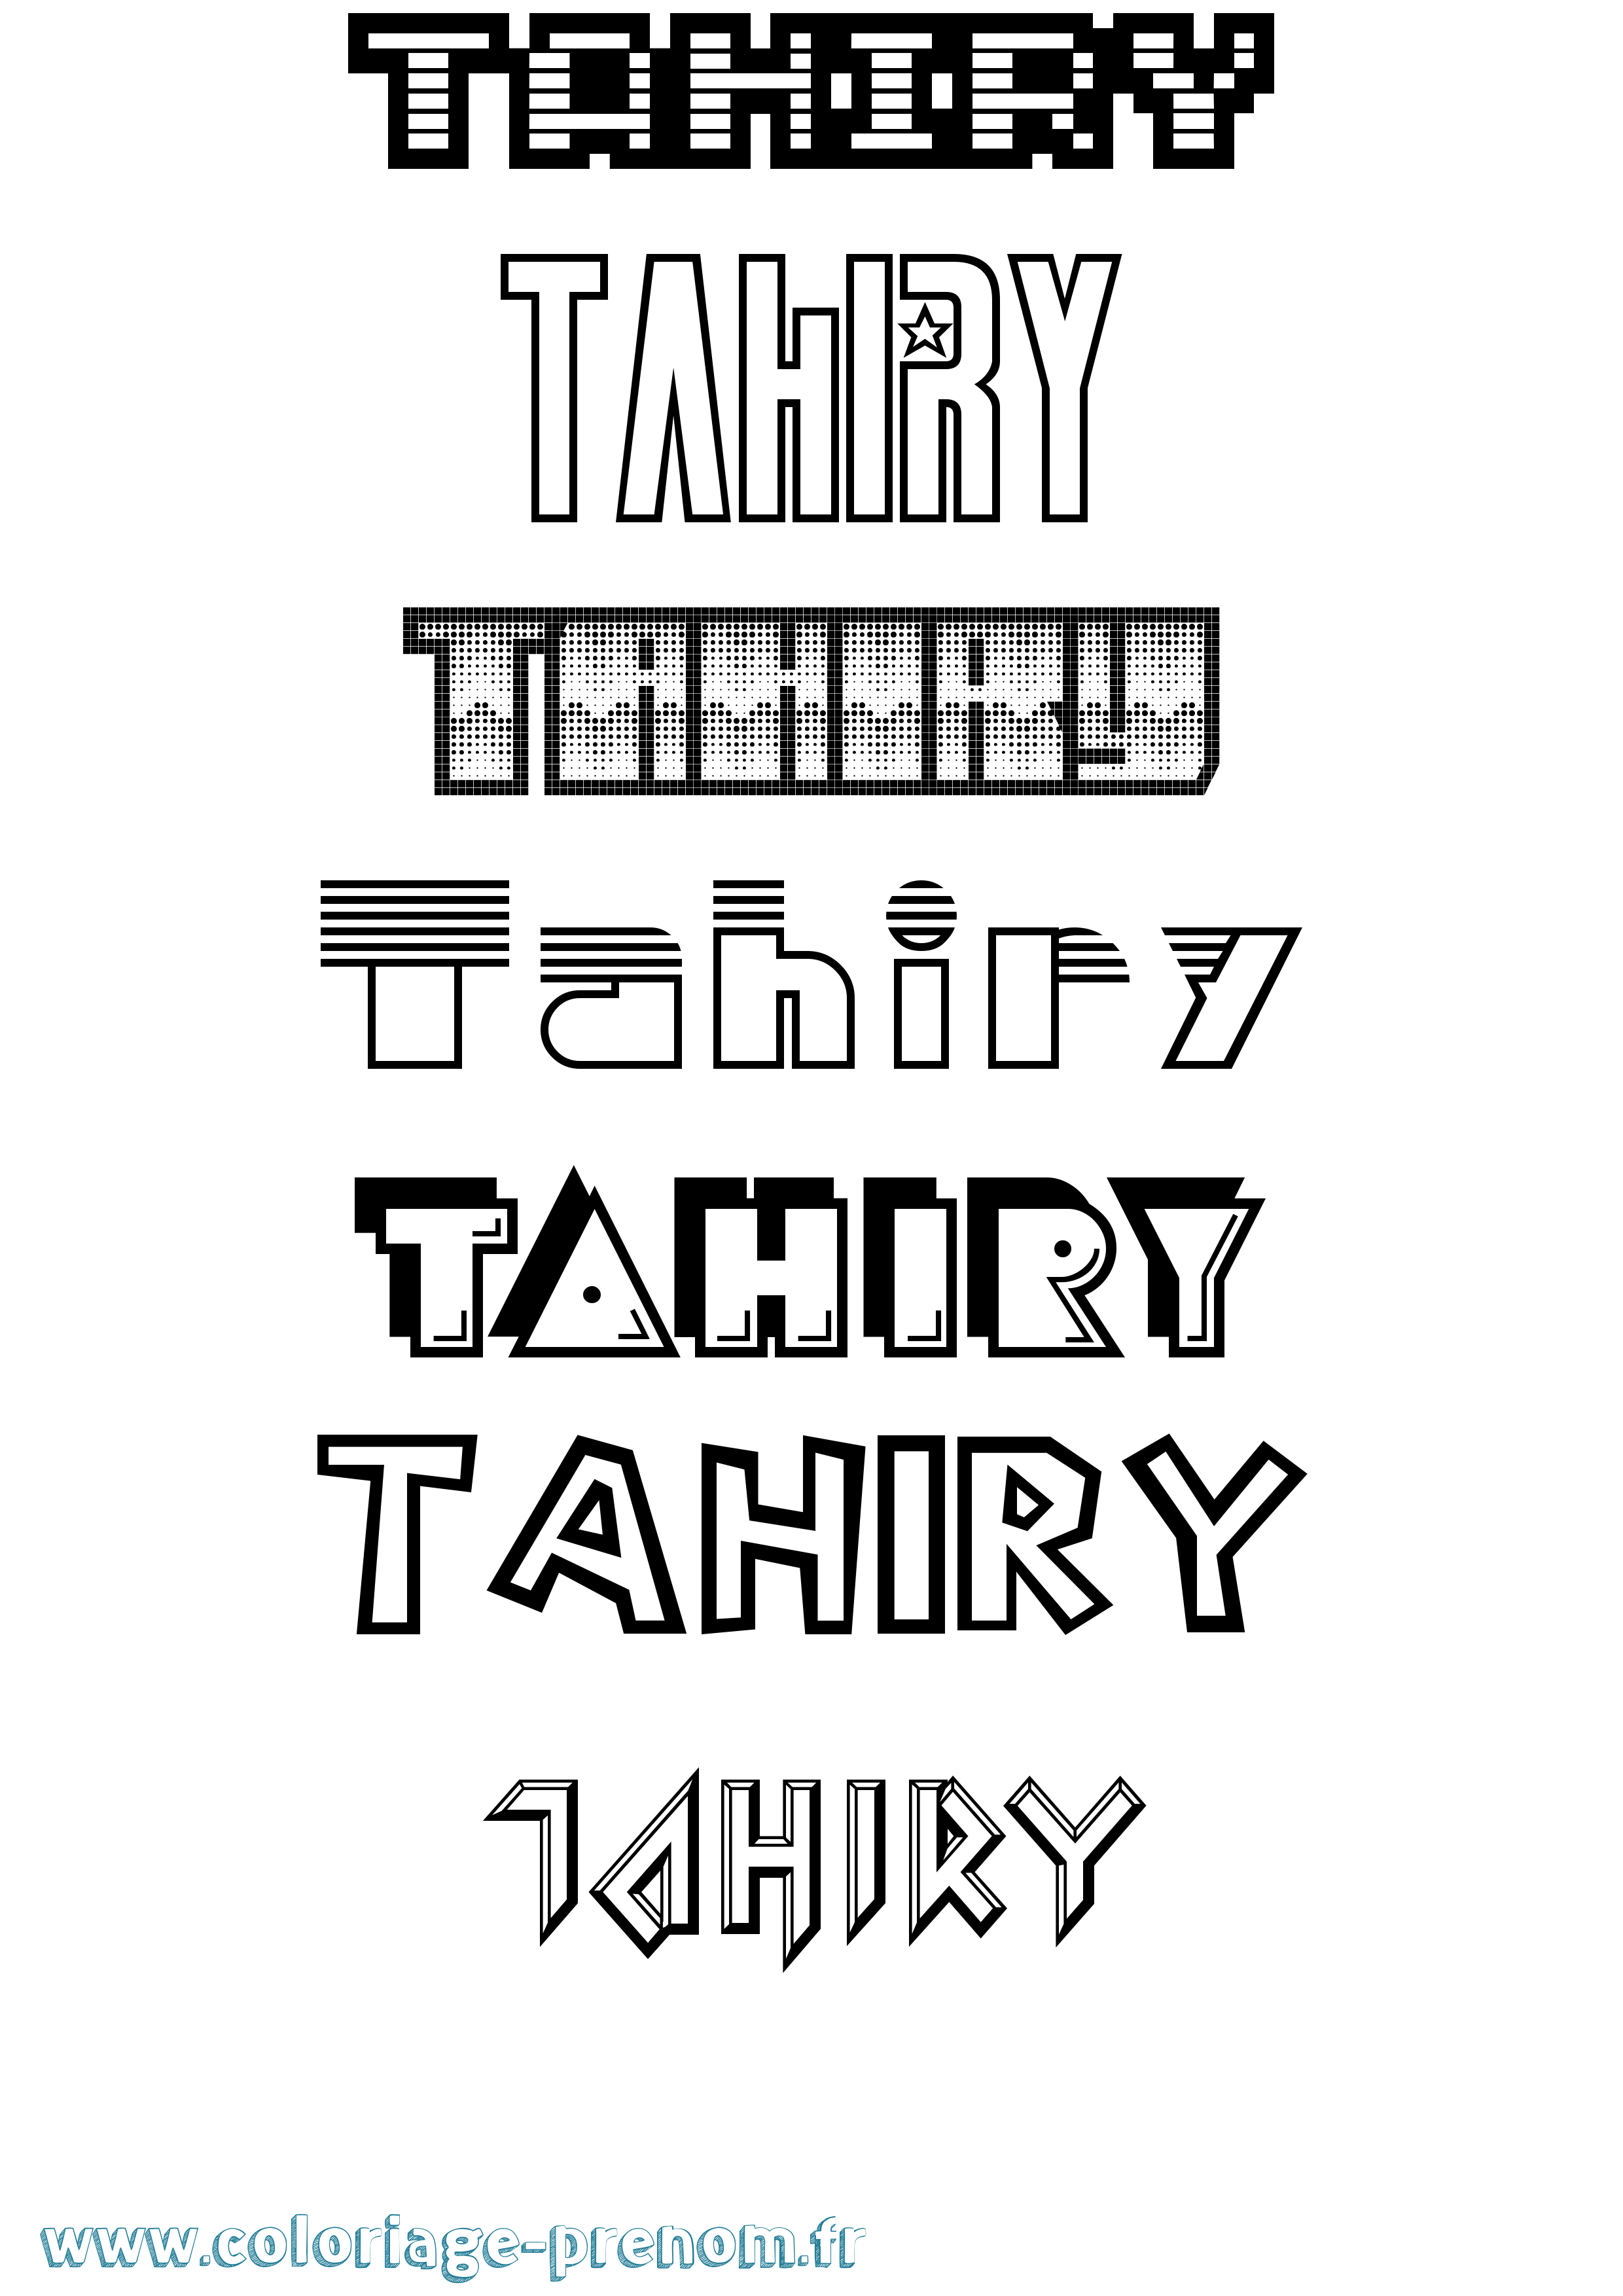 Coloriage prénom Tahiry Jeux Vidéos